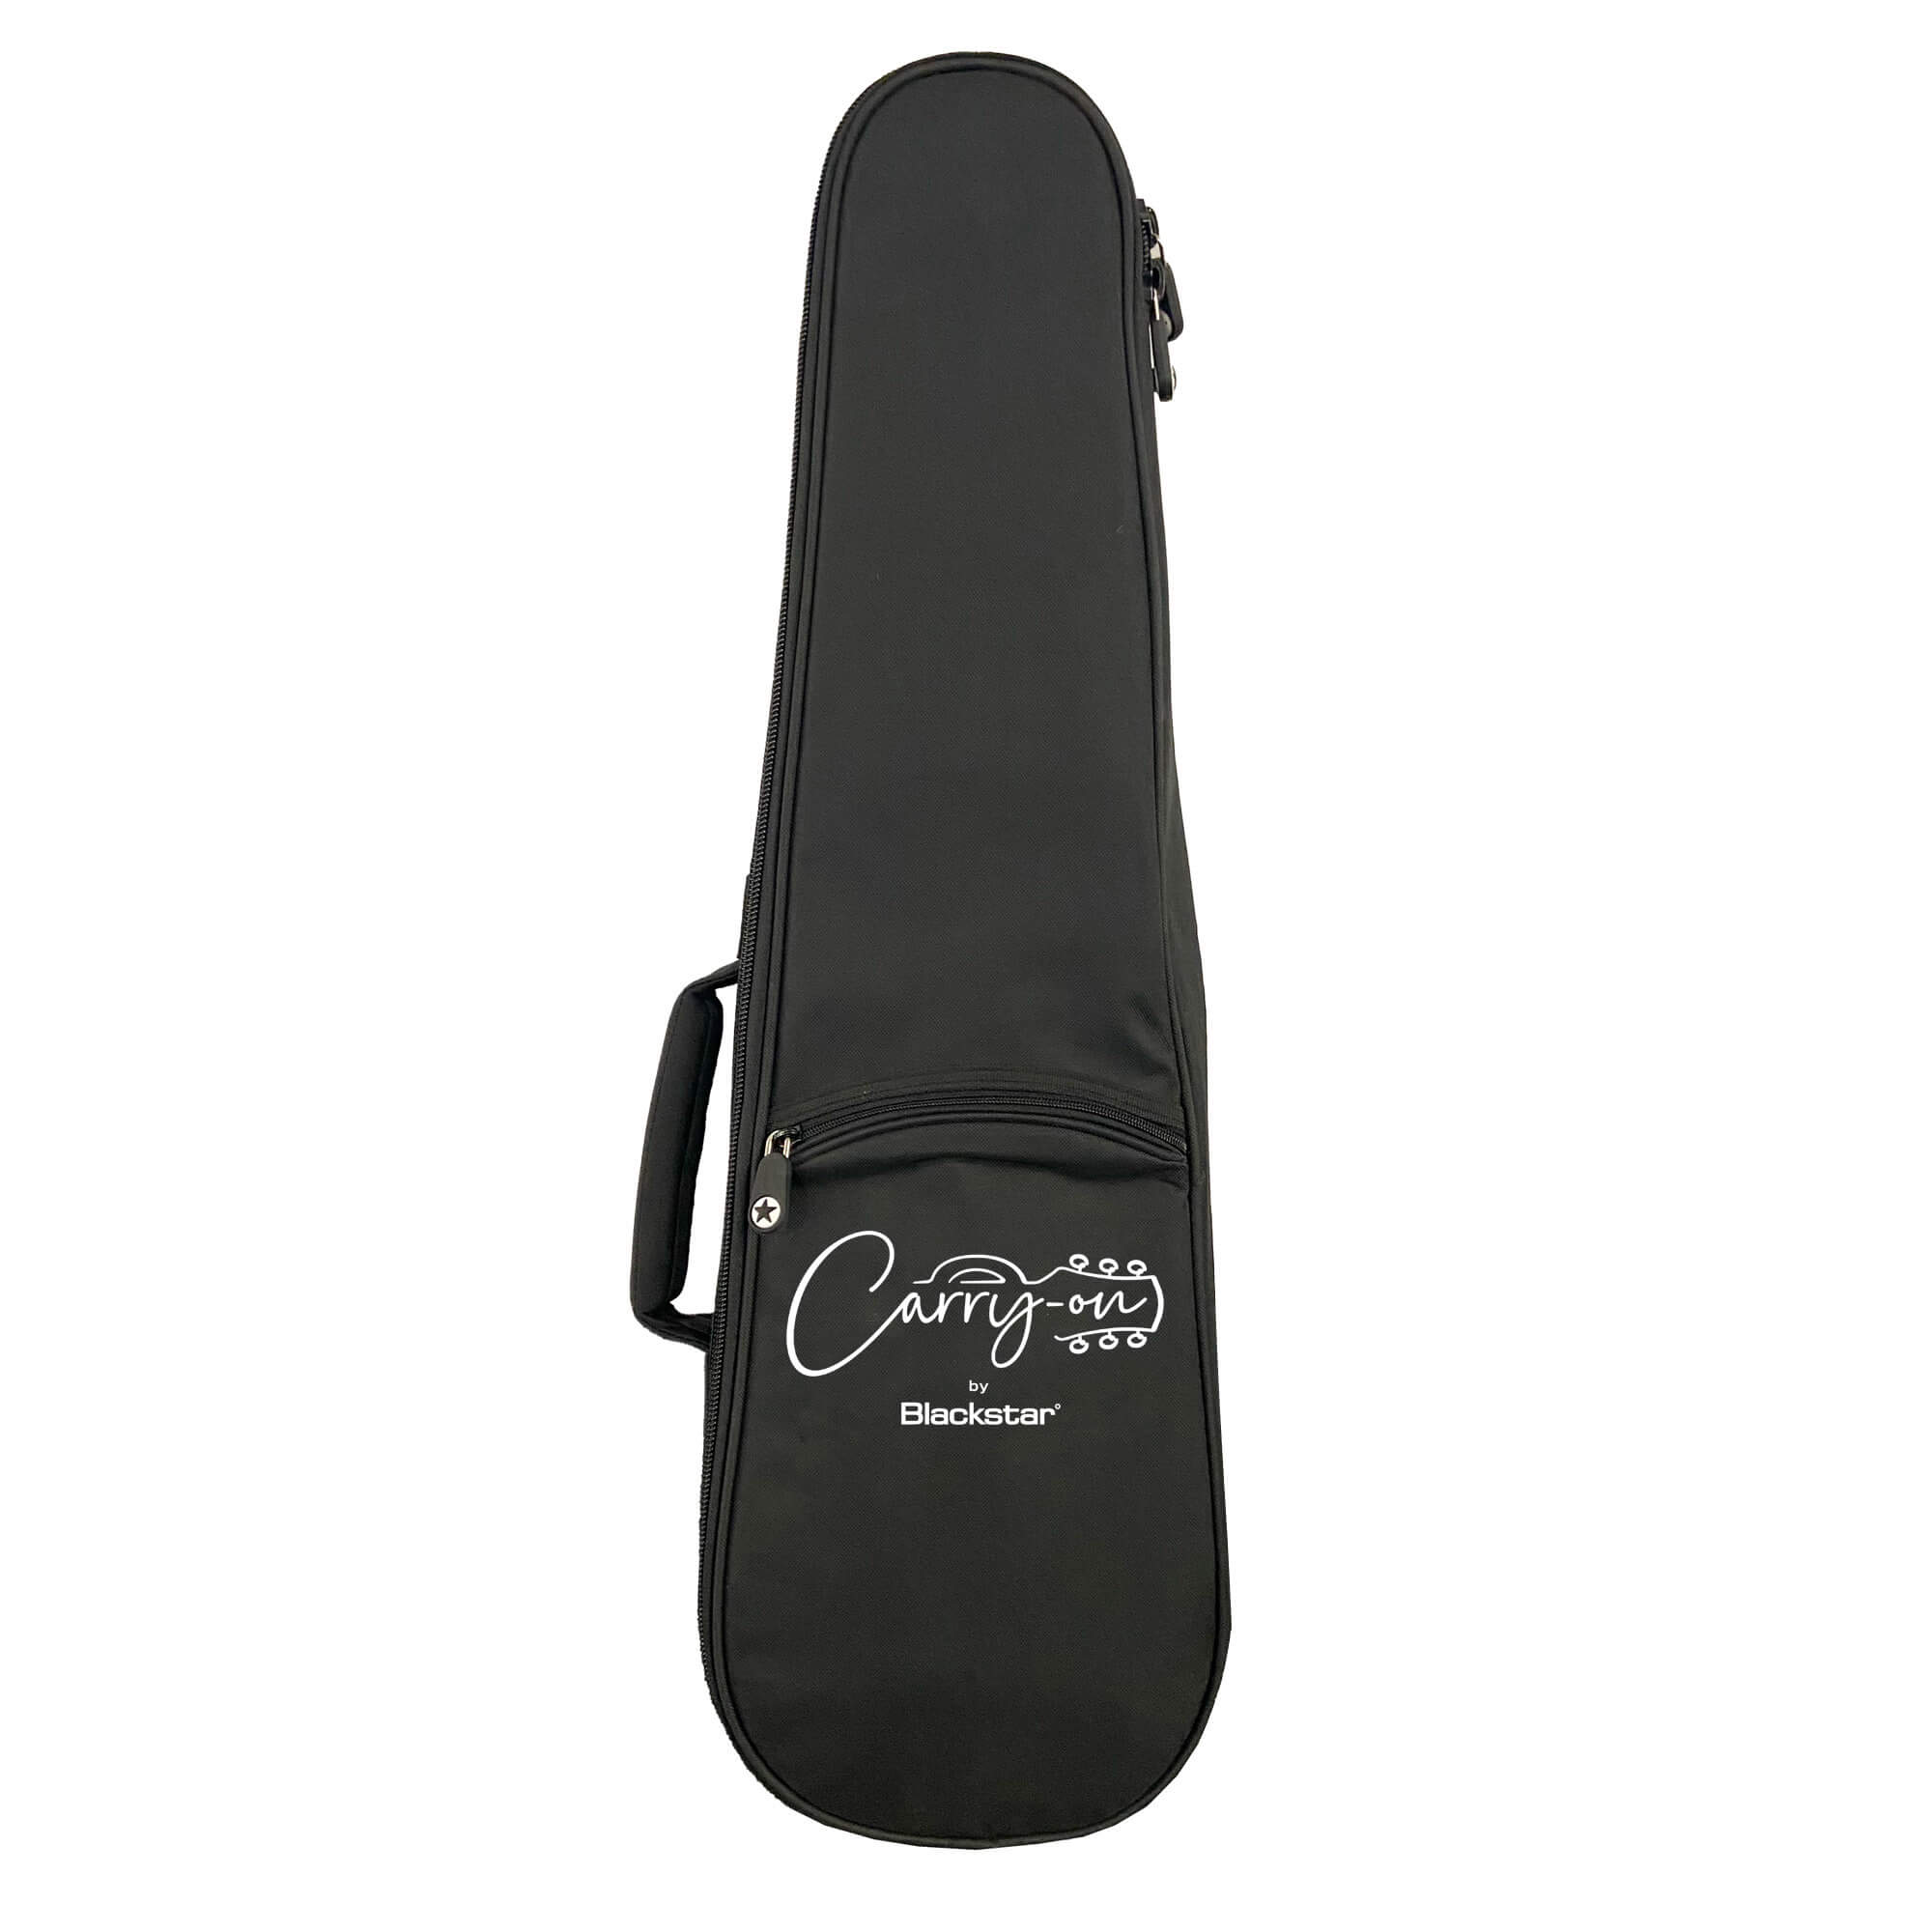 BLACKSTAR Carry-on Travel Guitar Black with Gig Bag